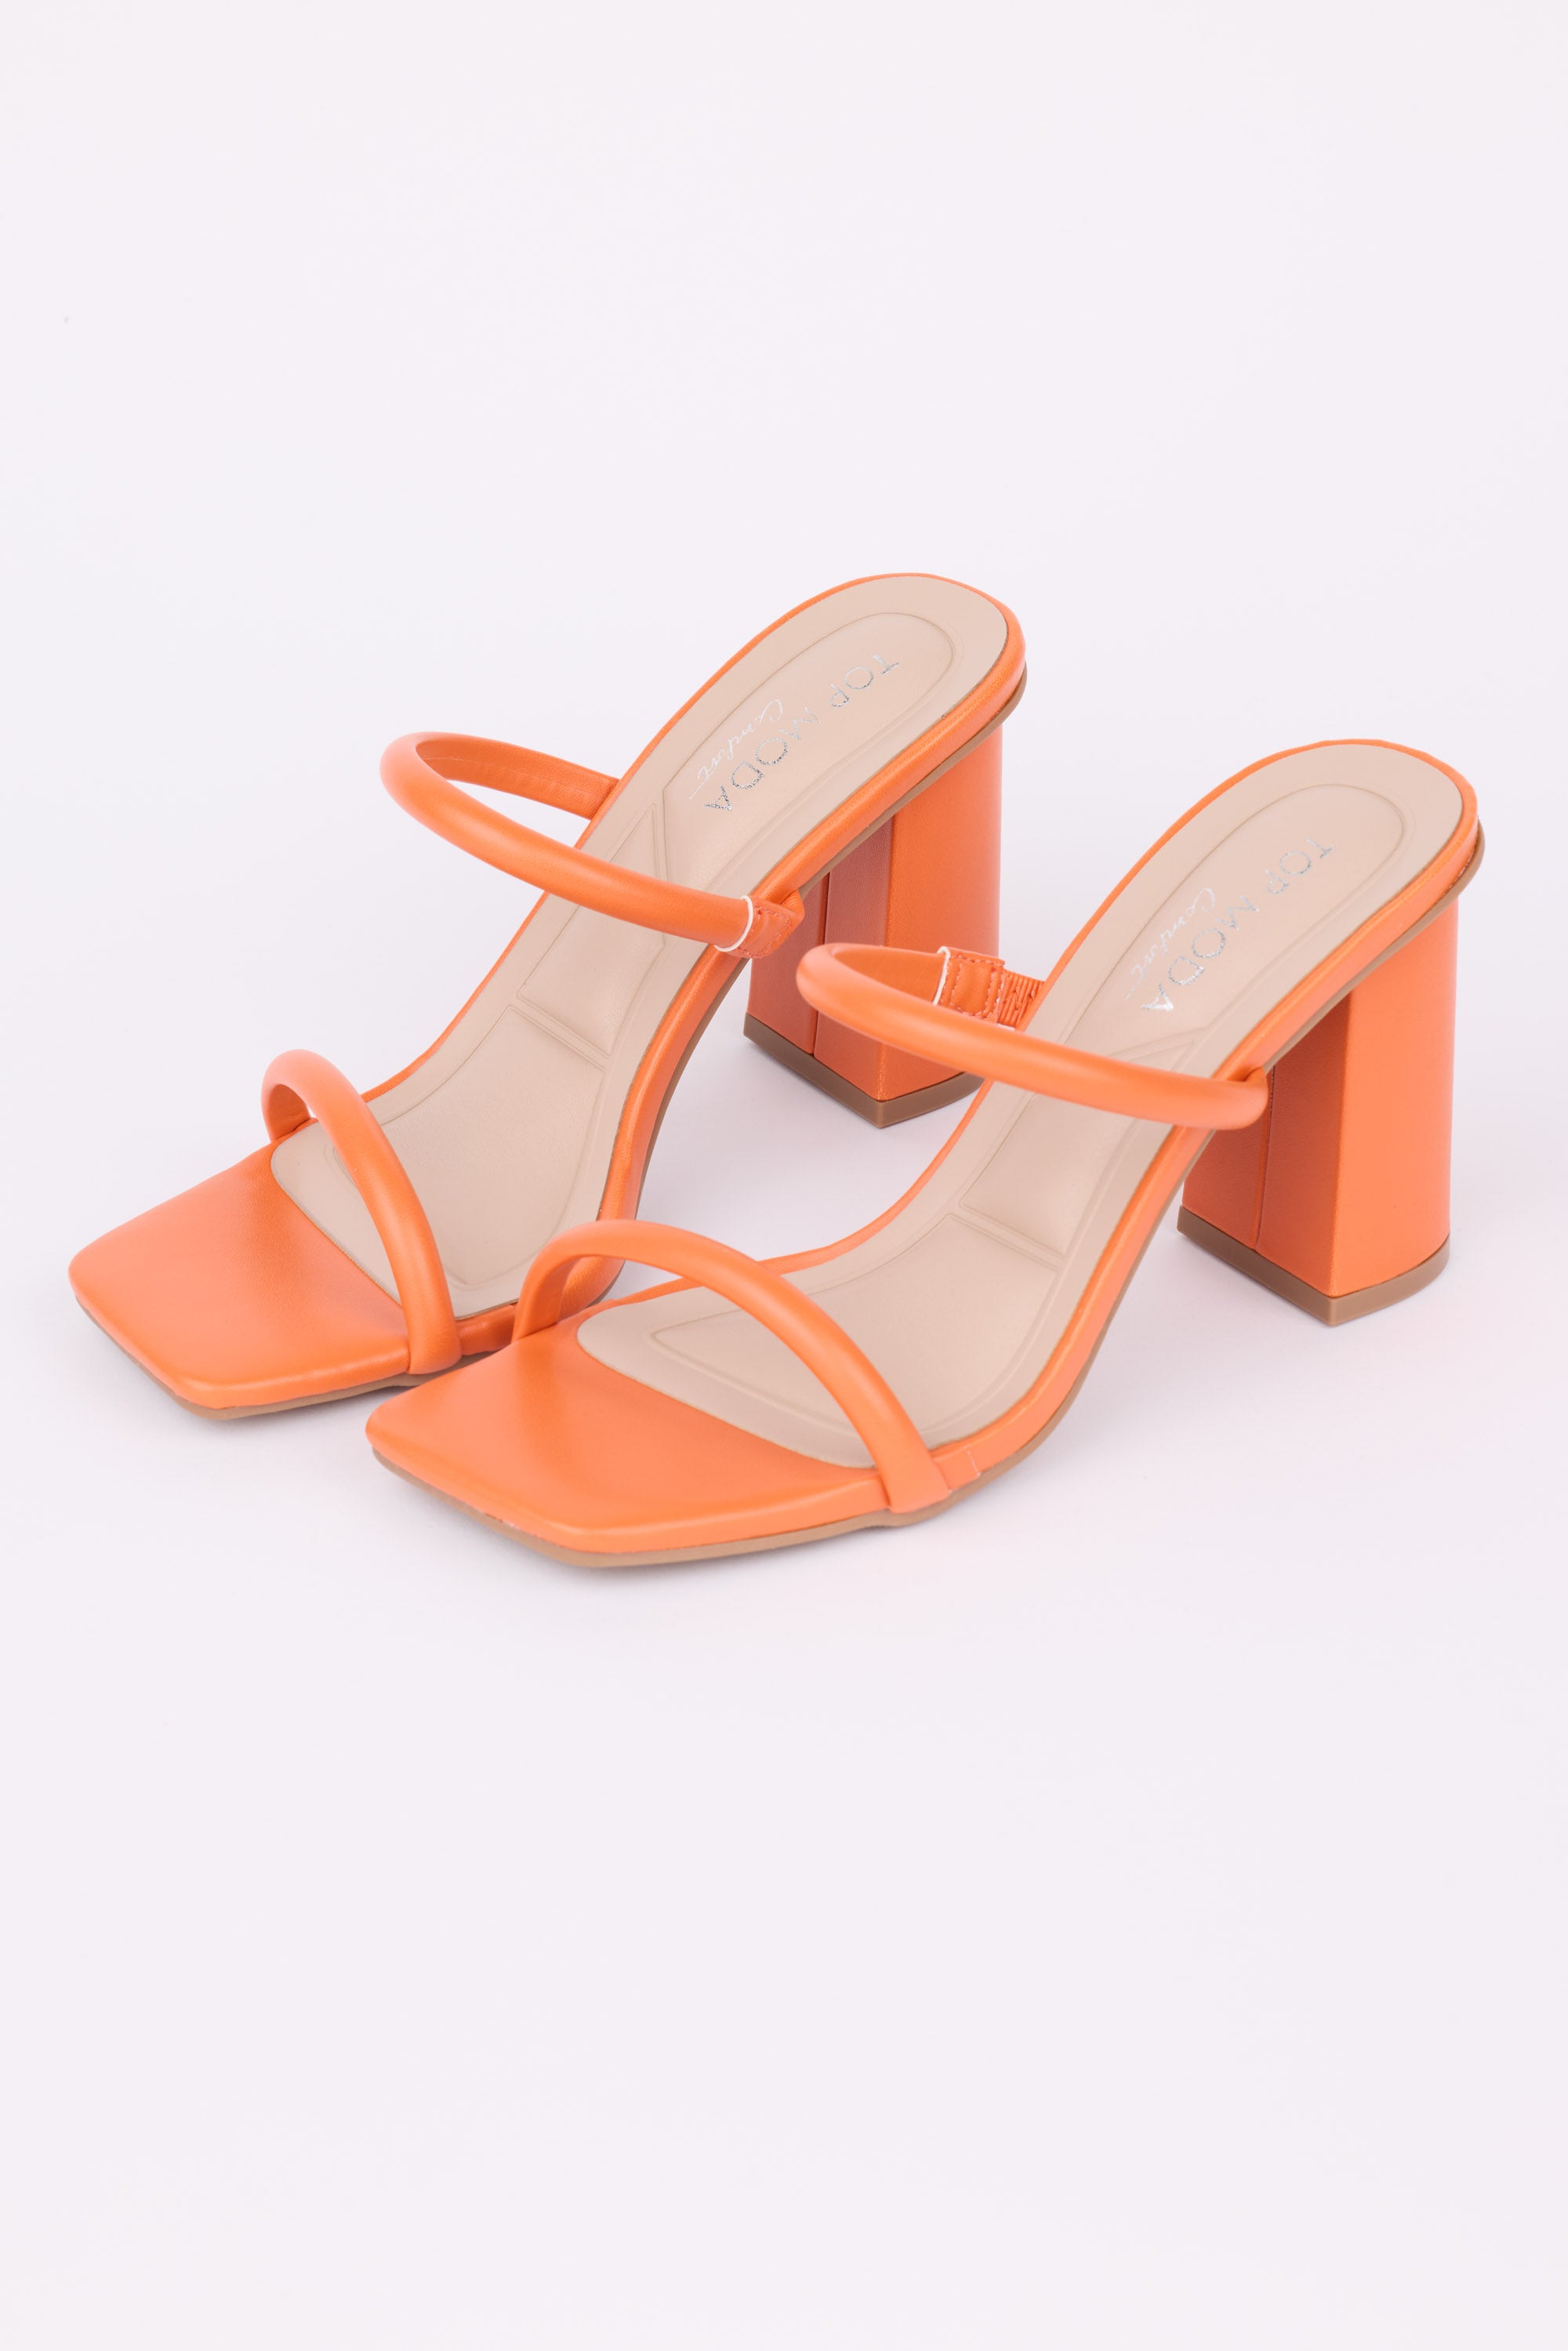 Kayce Heels- Orange